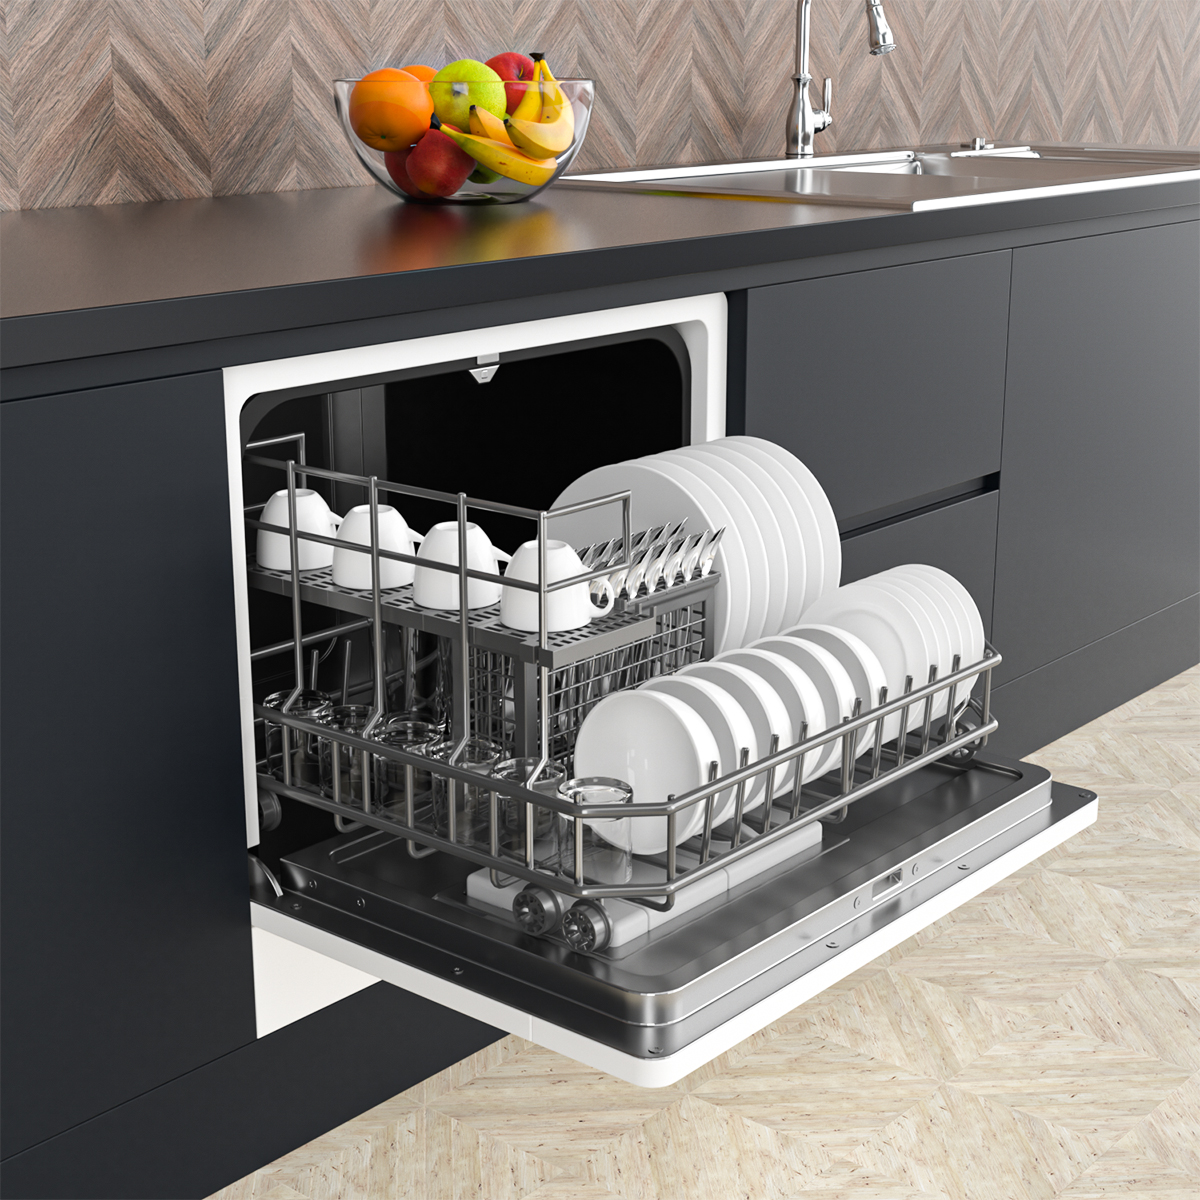 Warmto-6-Piece-Countertop-Dishwasher-Counter-Top-Dishwasher-Machine-Delay-Start-LED-Display-5-Washin-1931541-21